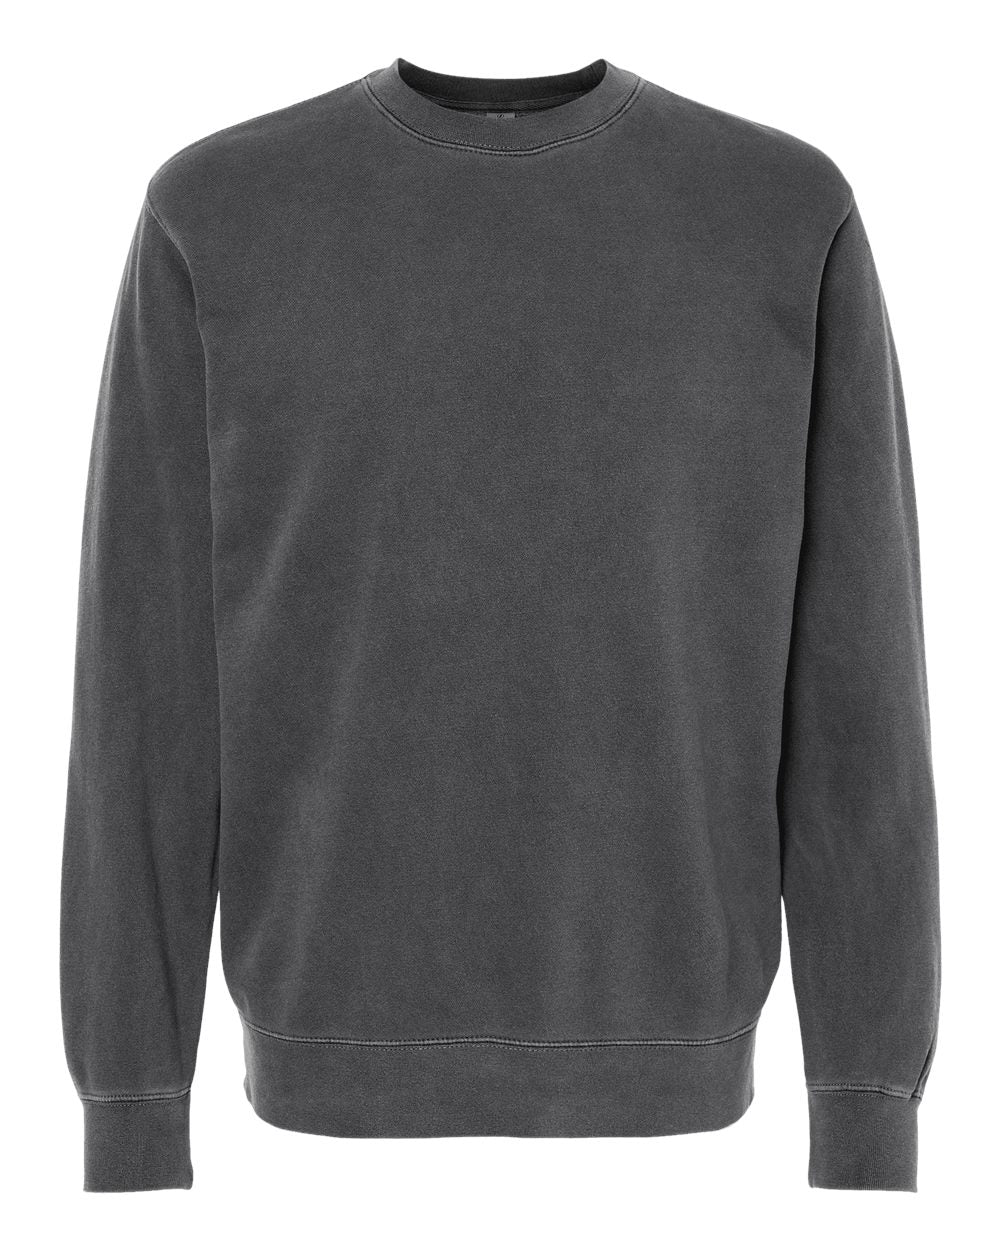 Pigment-Dyed Black Crewneck Sweatshirt (Adult)